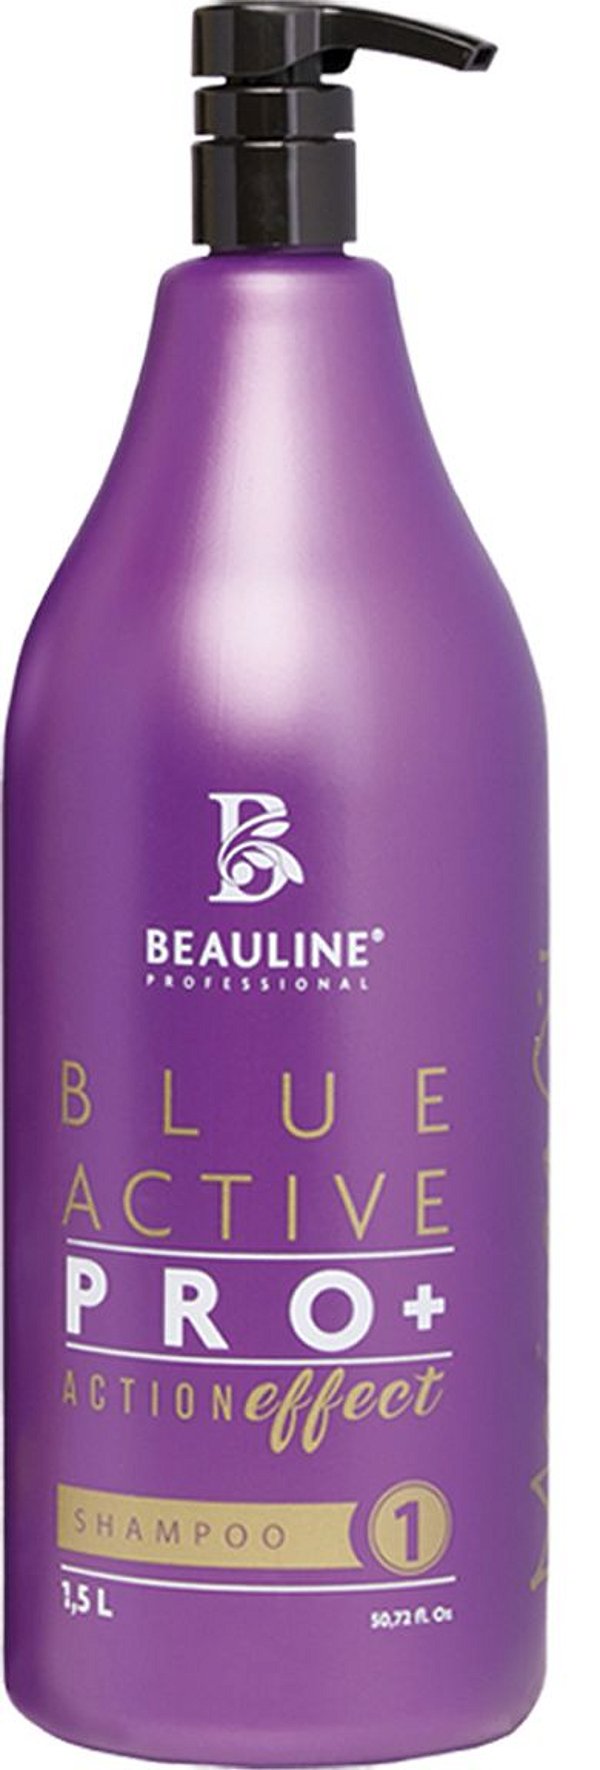 Shampoo Beau Blond Effect - 1,5Lt